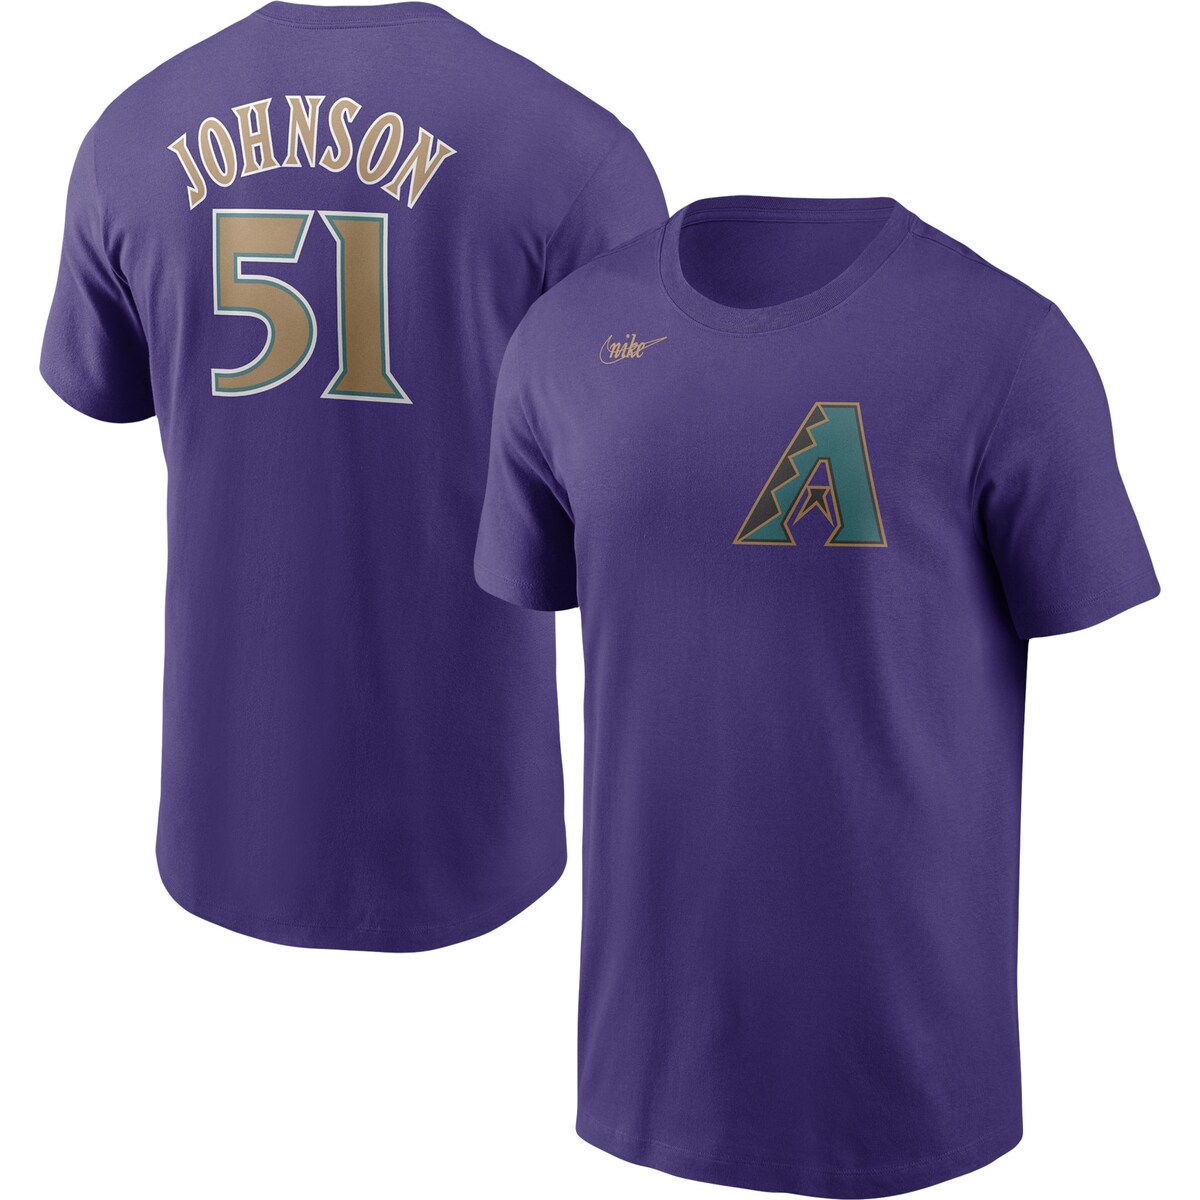 MLB ダイヤモンドバックス ランディ・ジョンソン Tシャツ Nike ナイキ メンズ パープル (Nike Men's MLB Cooperstown NNT)